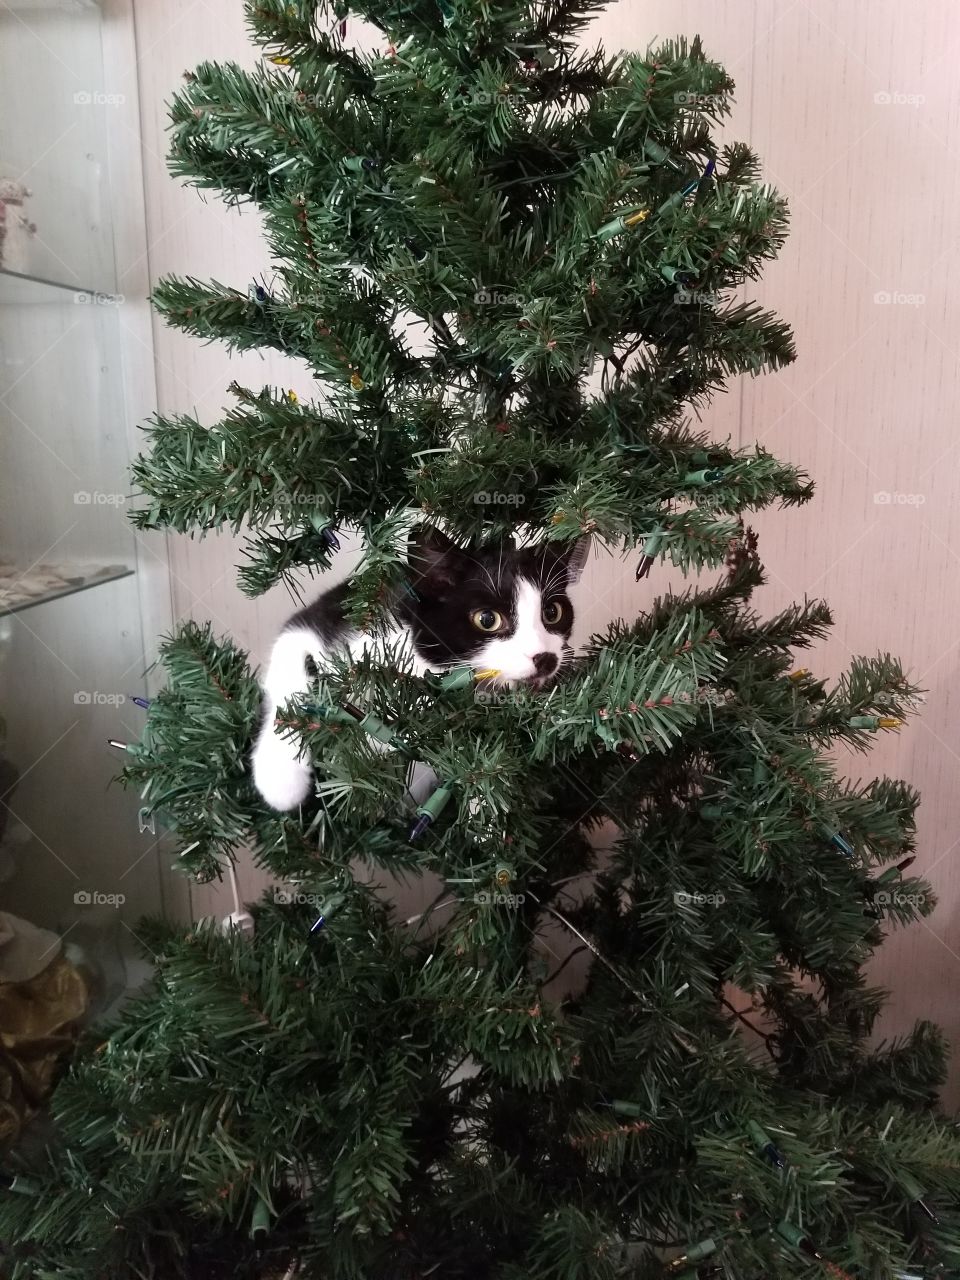 tree helper